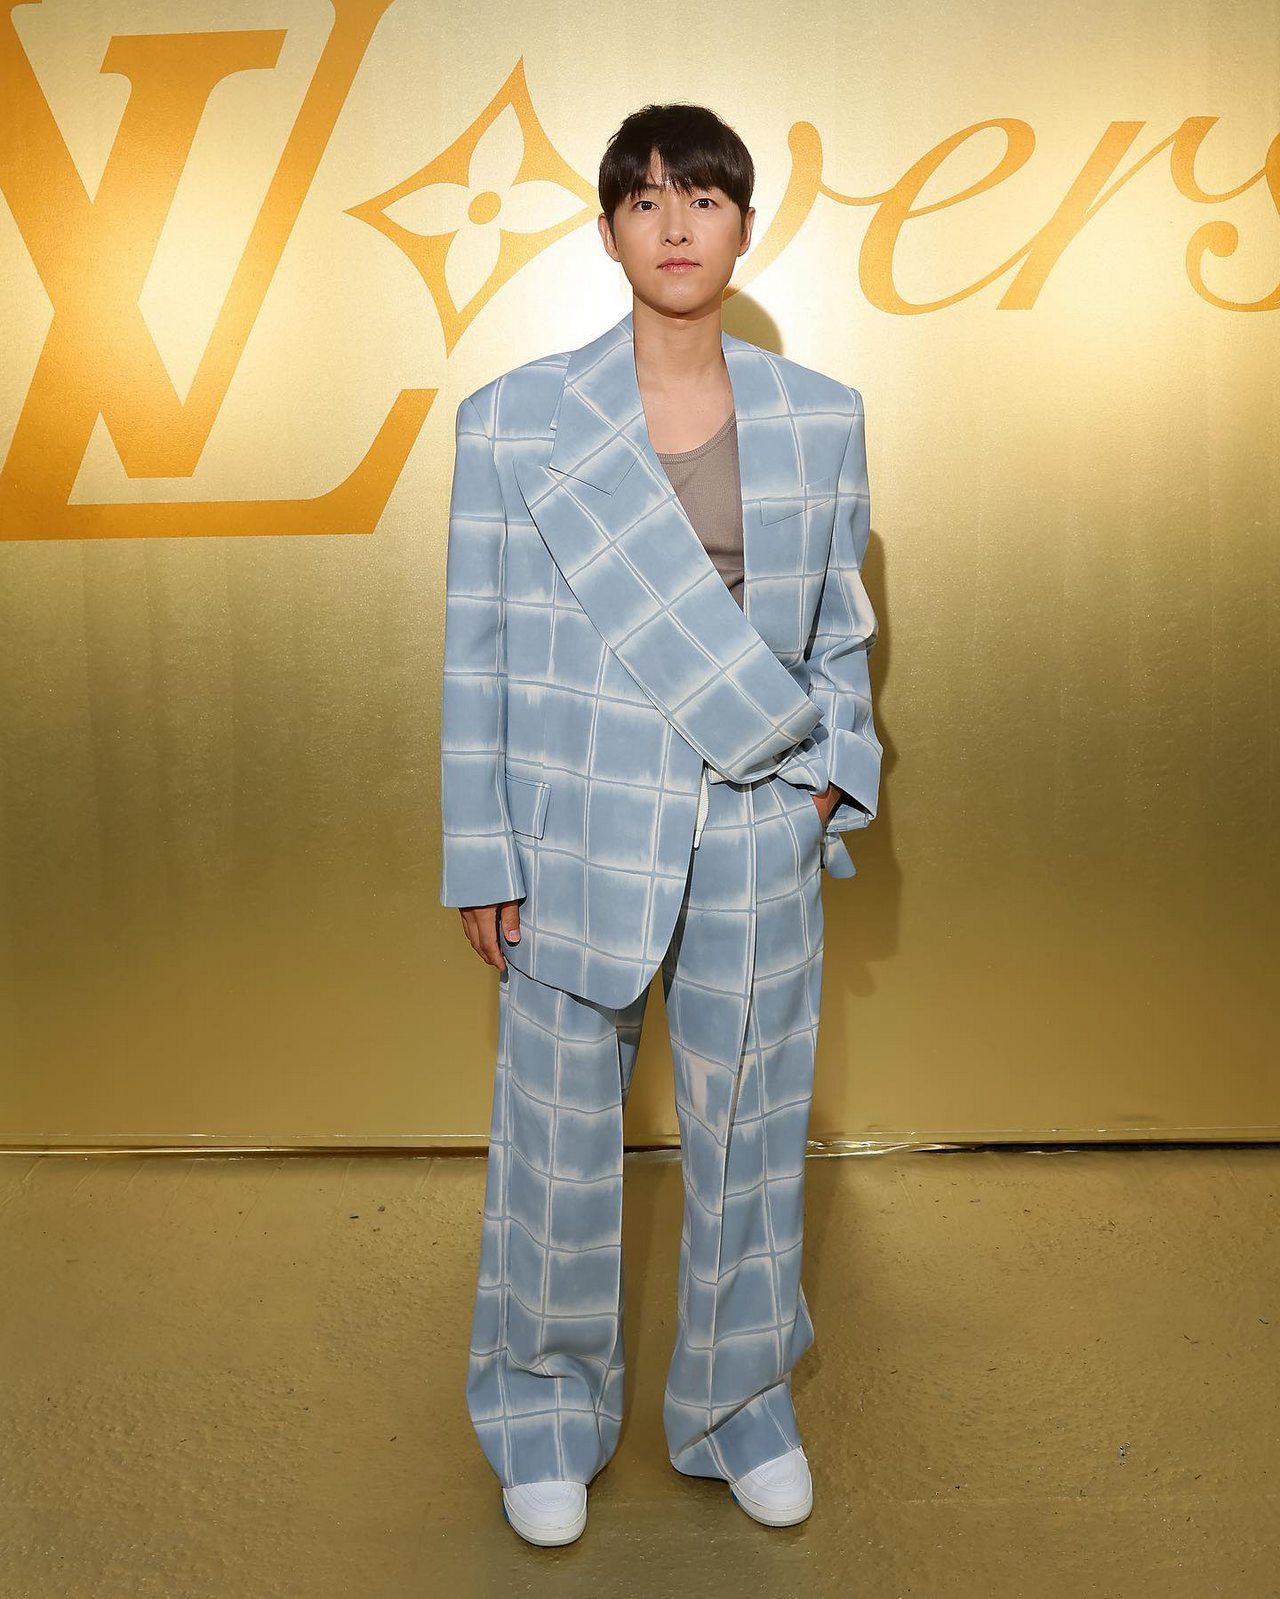 Louis Vuitton names Song Joong-ki brand ambassador